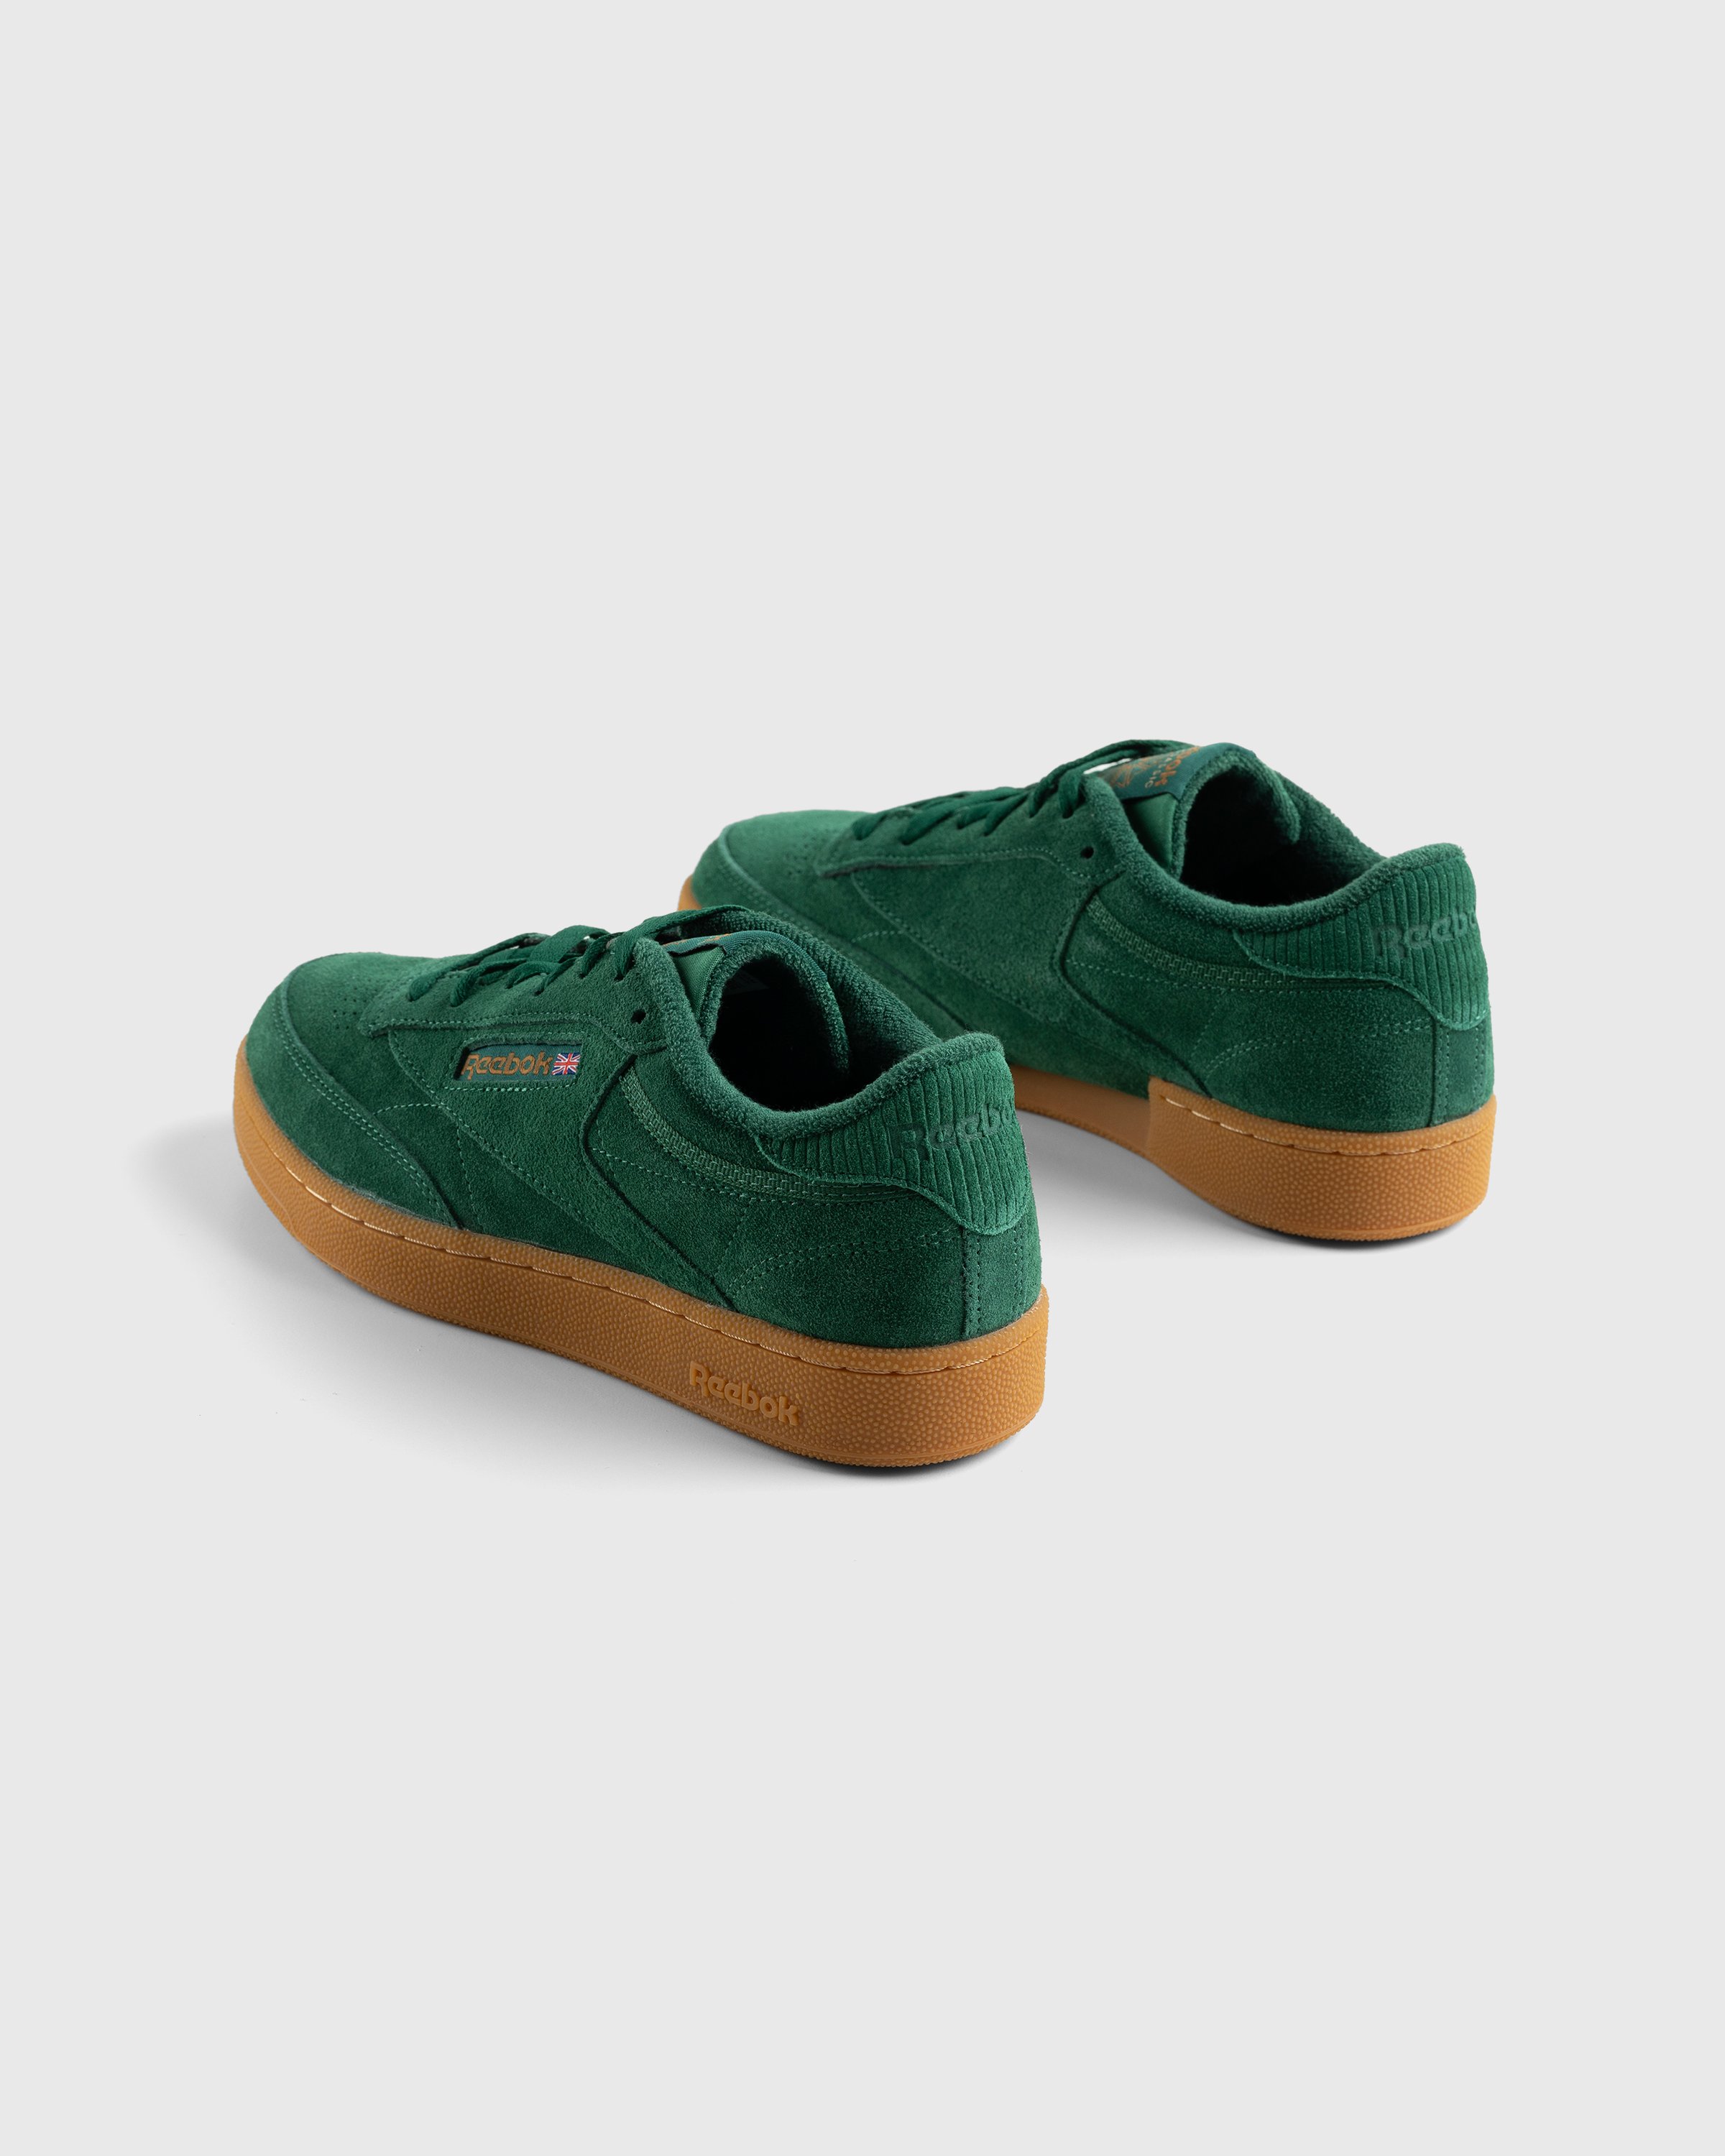 Reebok - Club C 85 Green - Footwear - Green - Image 4